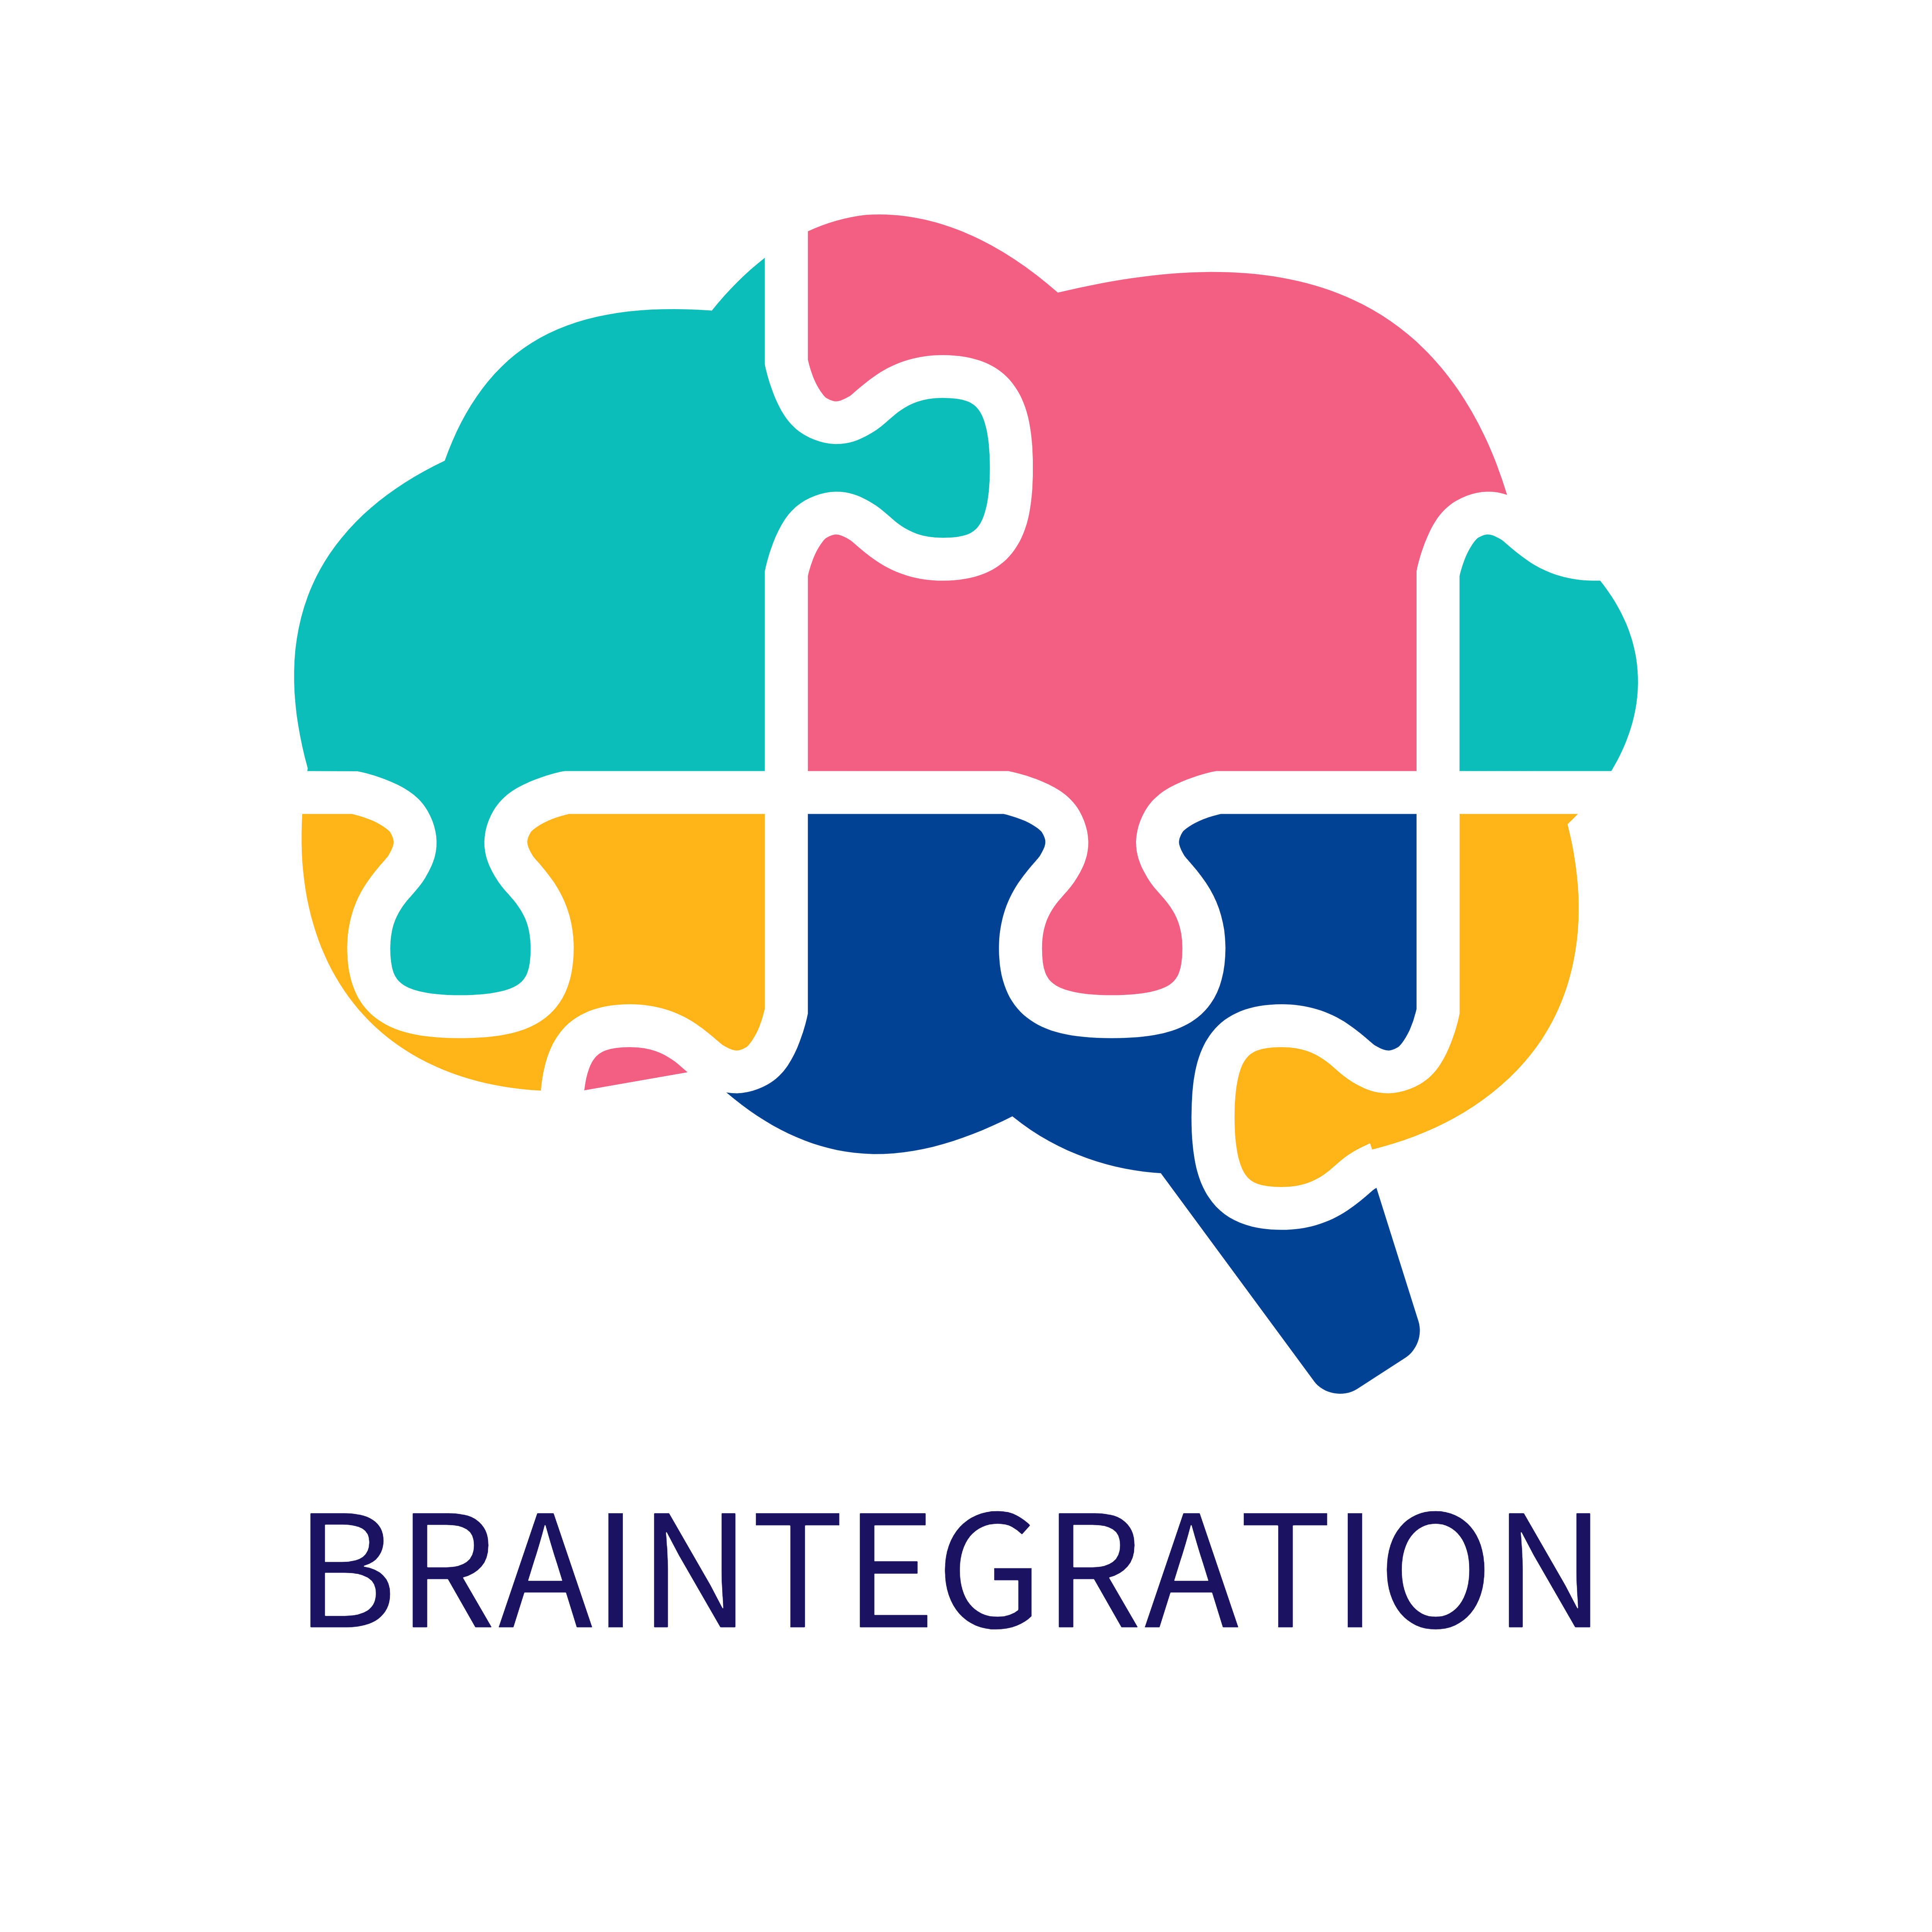 Braintegration